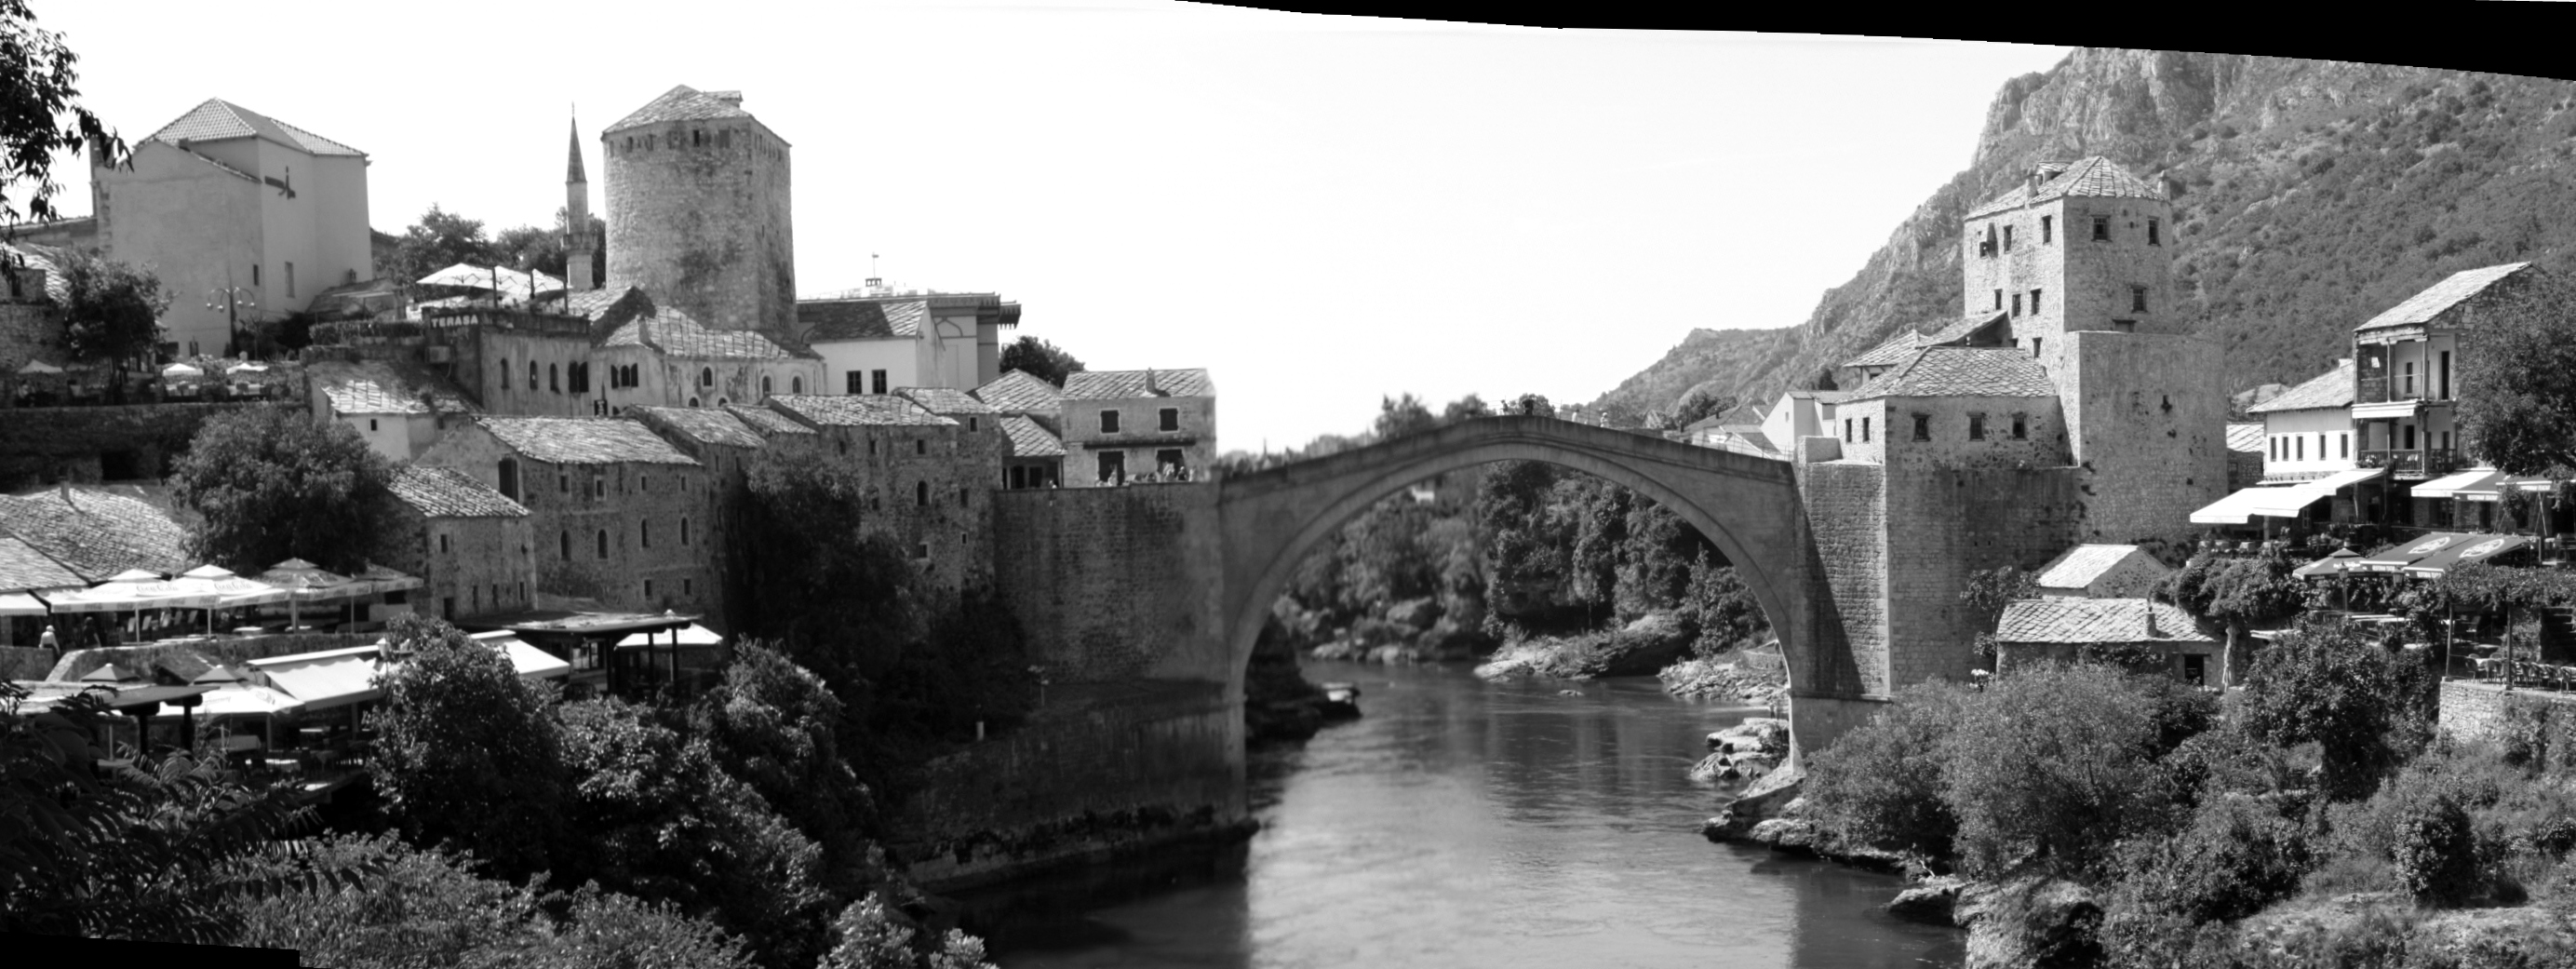 Stari Most, Mostar, Bosnia-Hercegovina